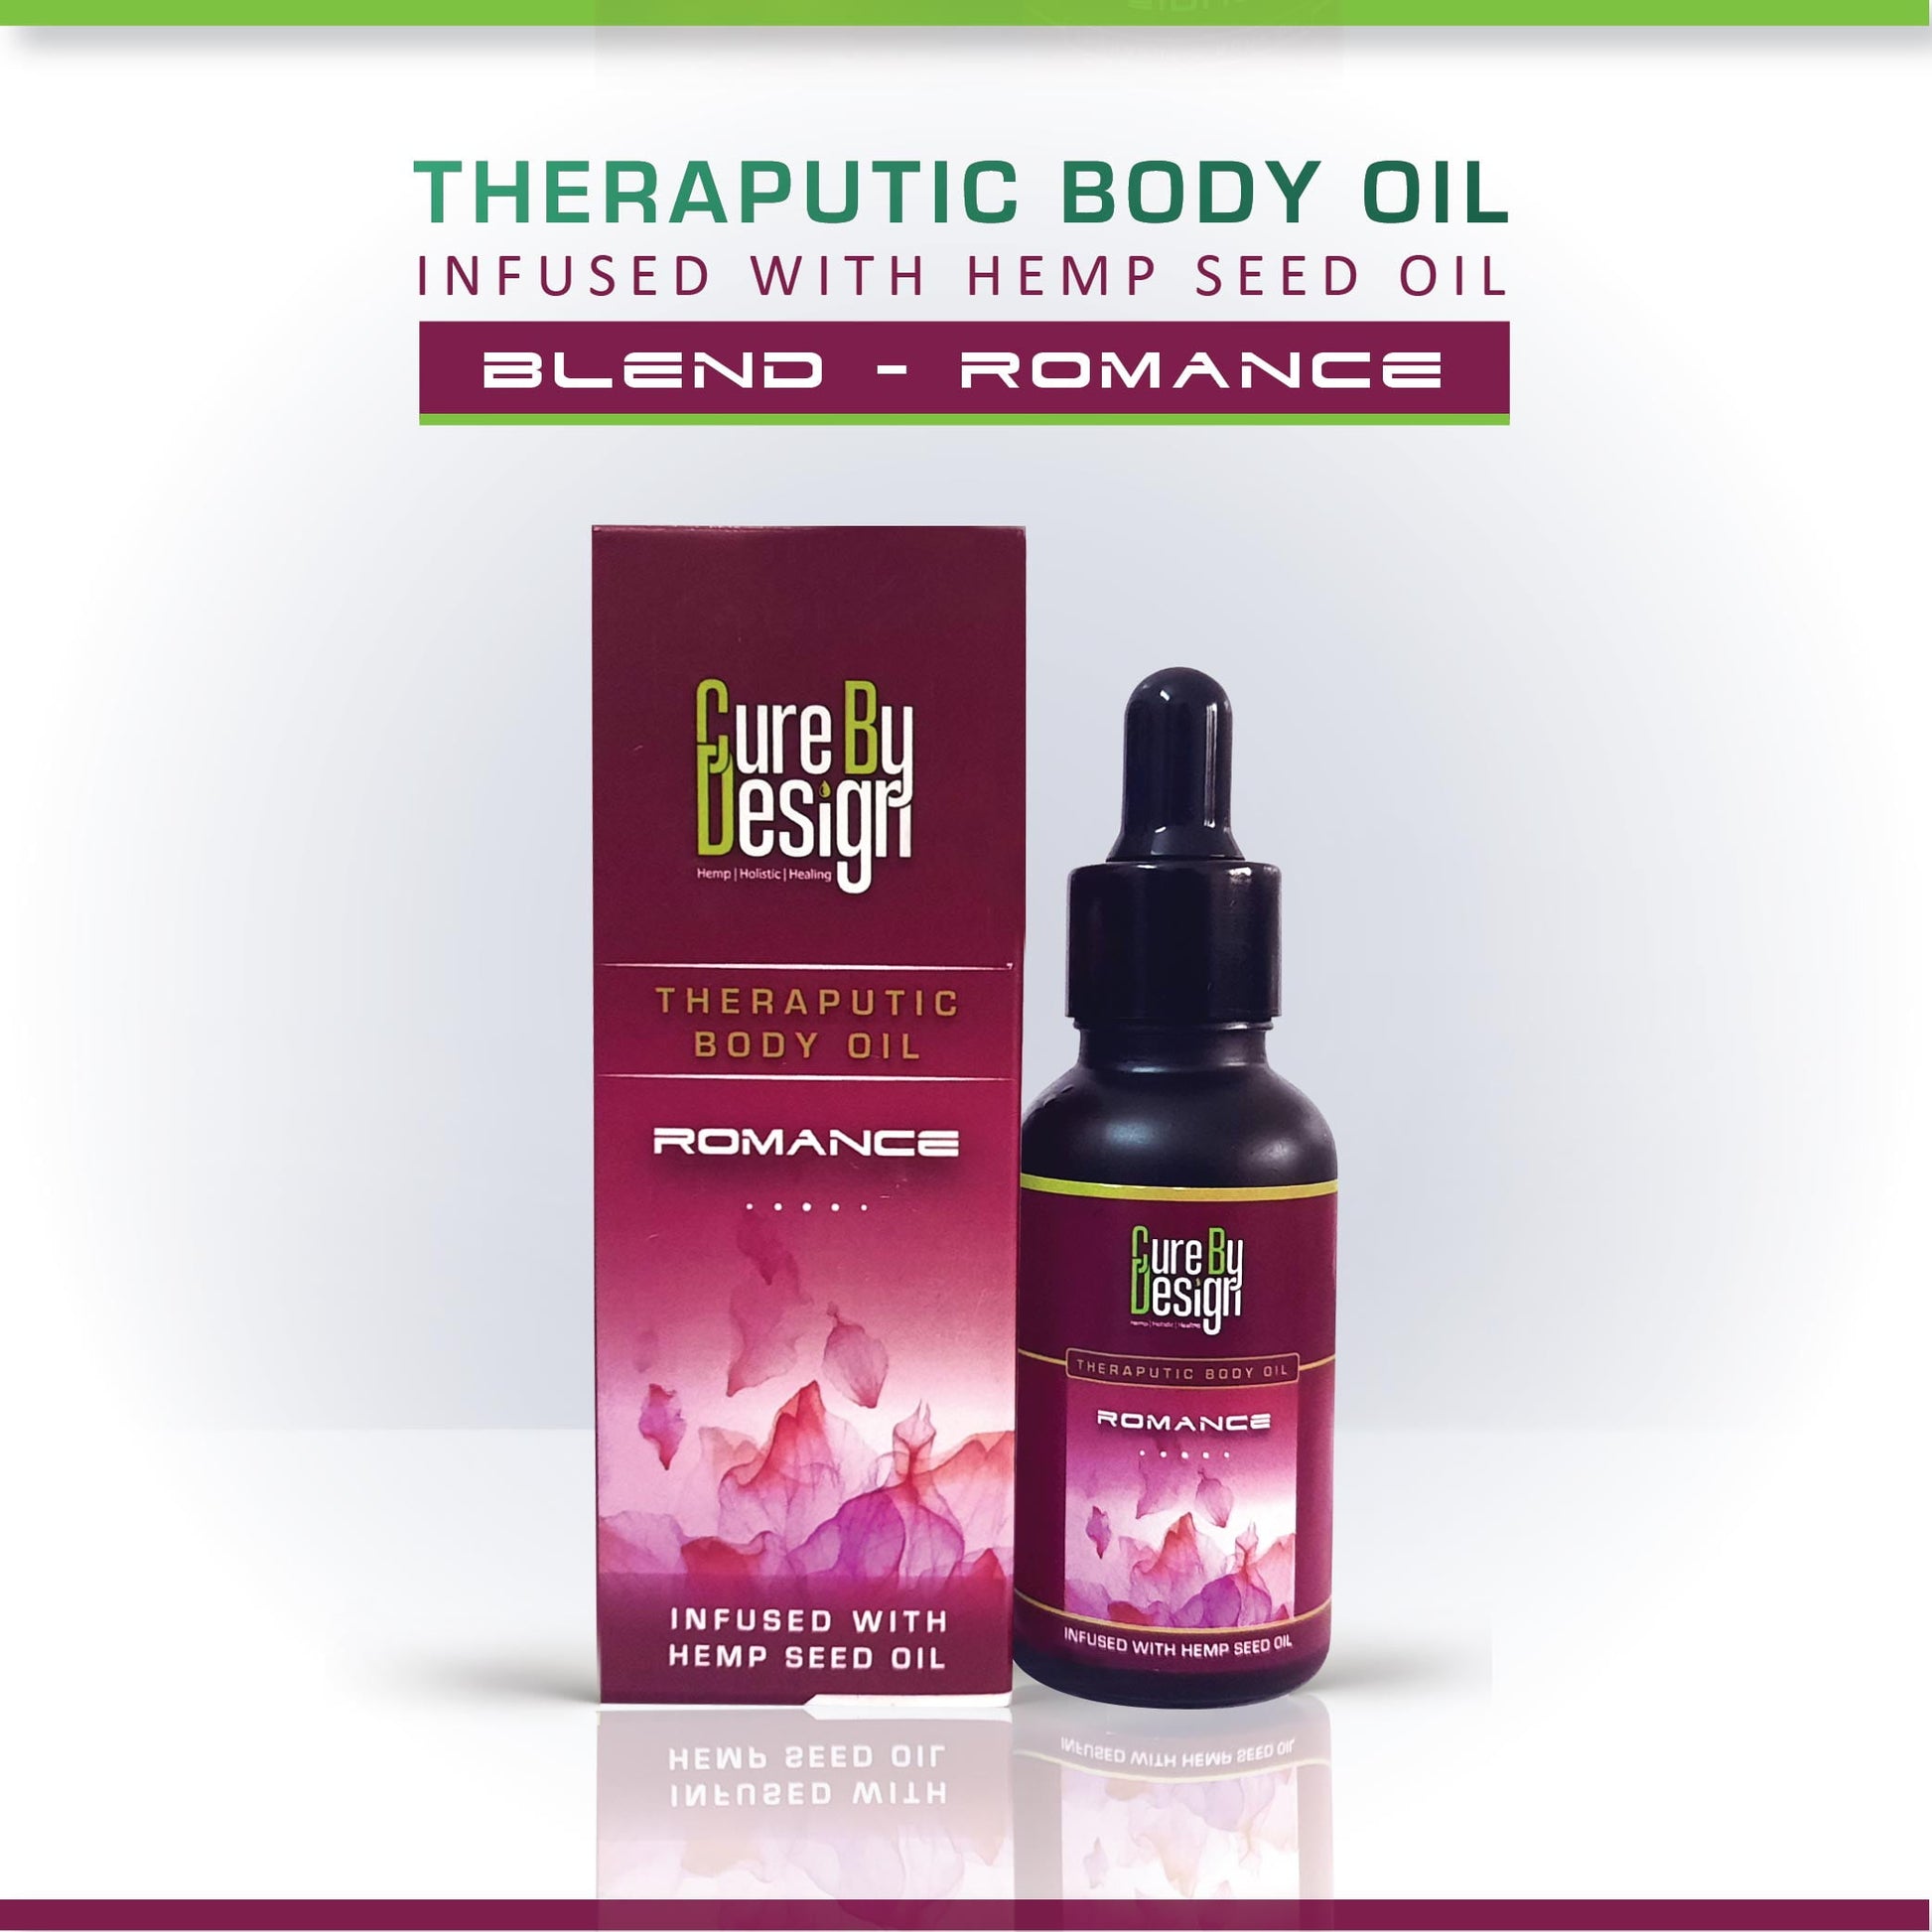 Cure By Design Therapeutic Body Oil